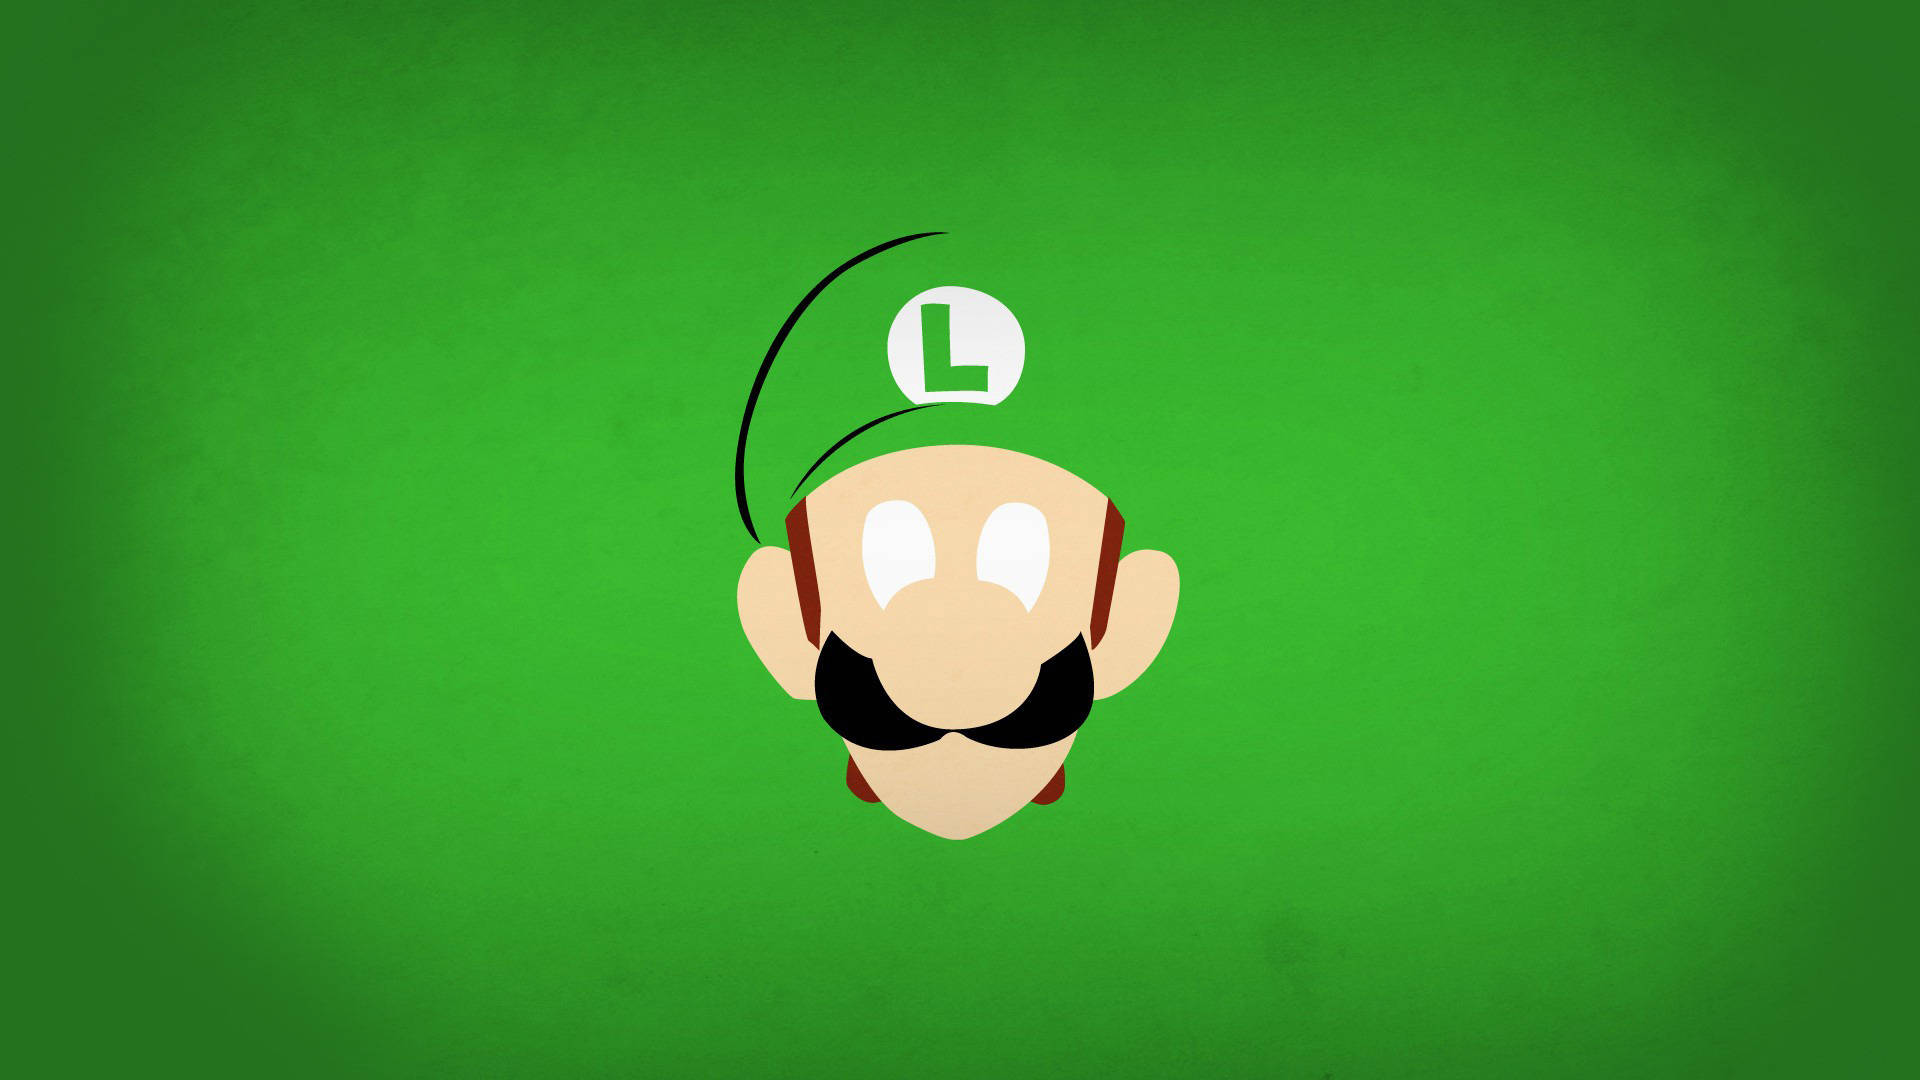 Luigi Nintendo Character Green Art